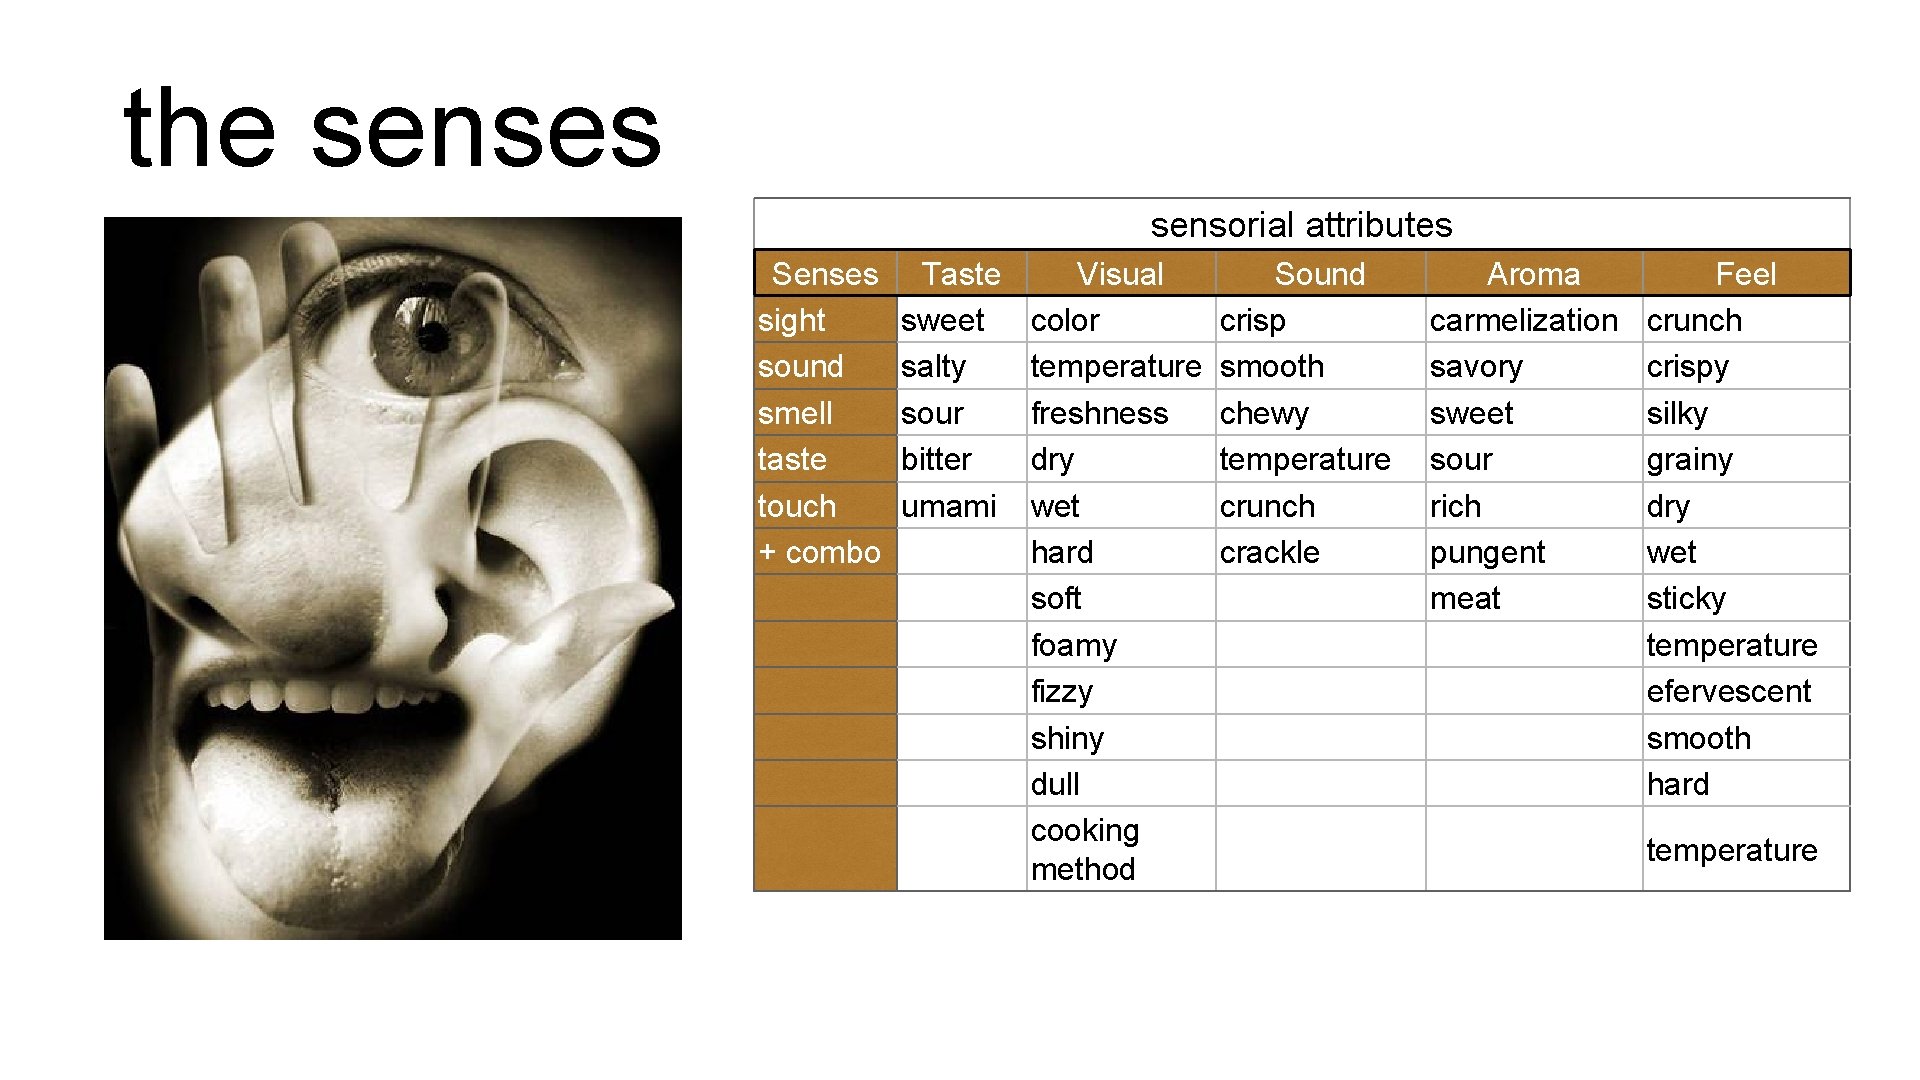 the senses sensorial attributes Senses sight sound smell taste touch + combo Taste sweet